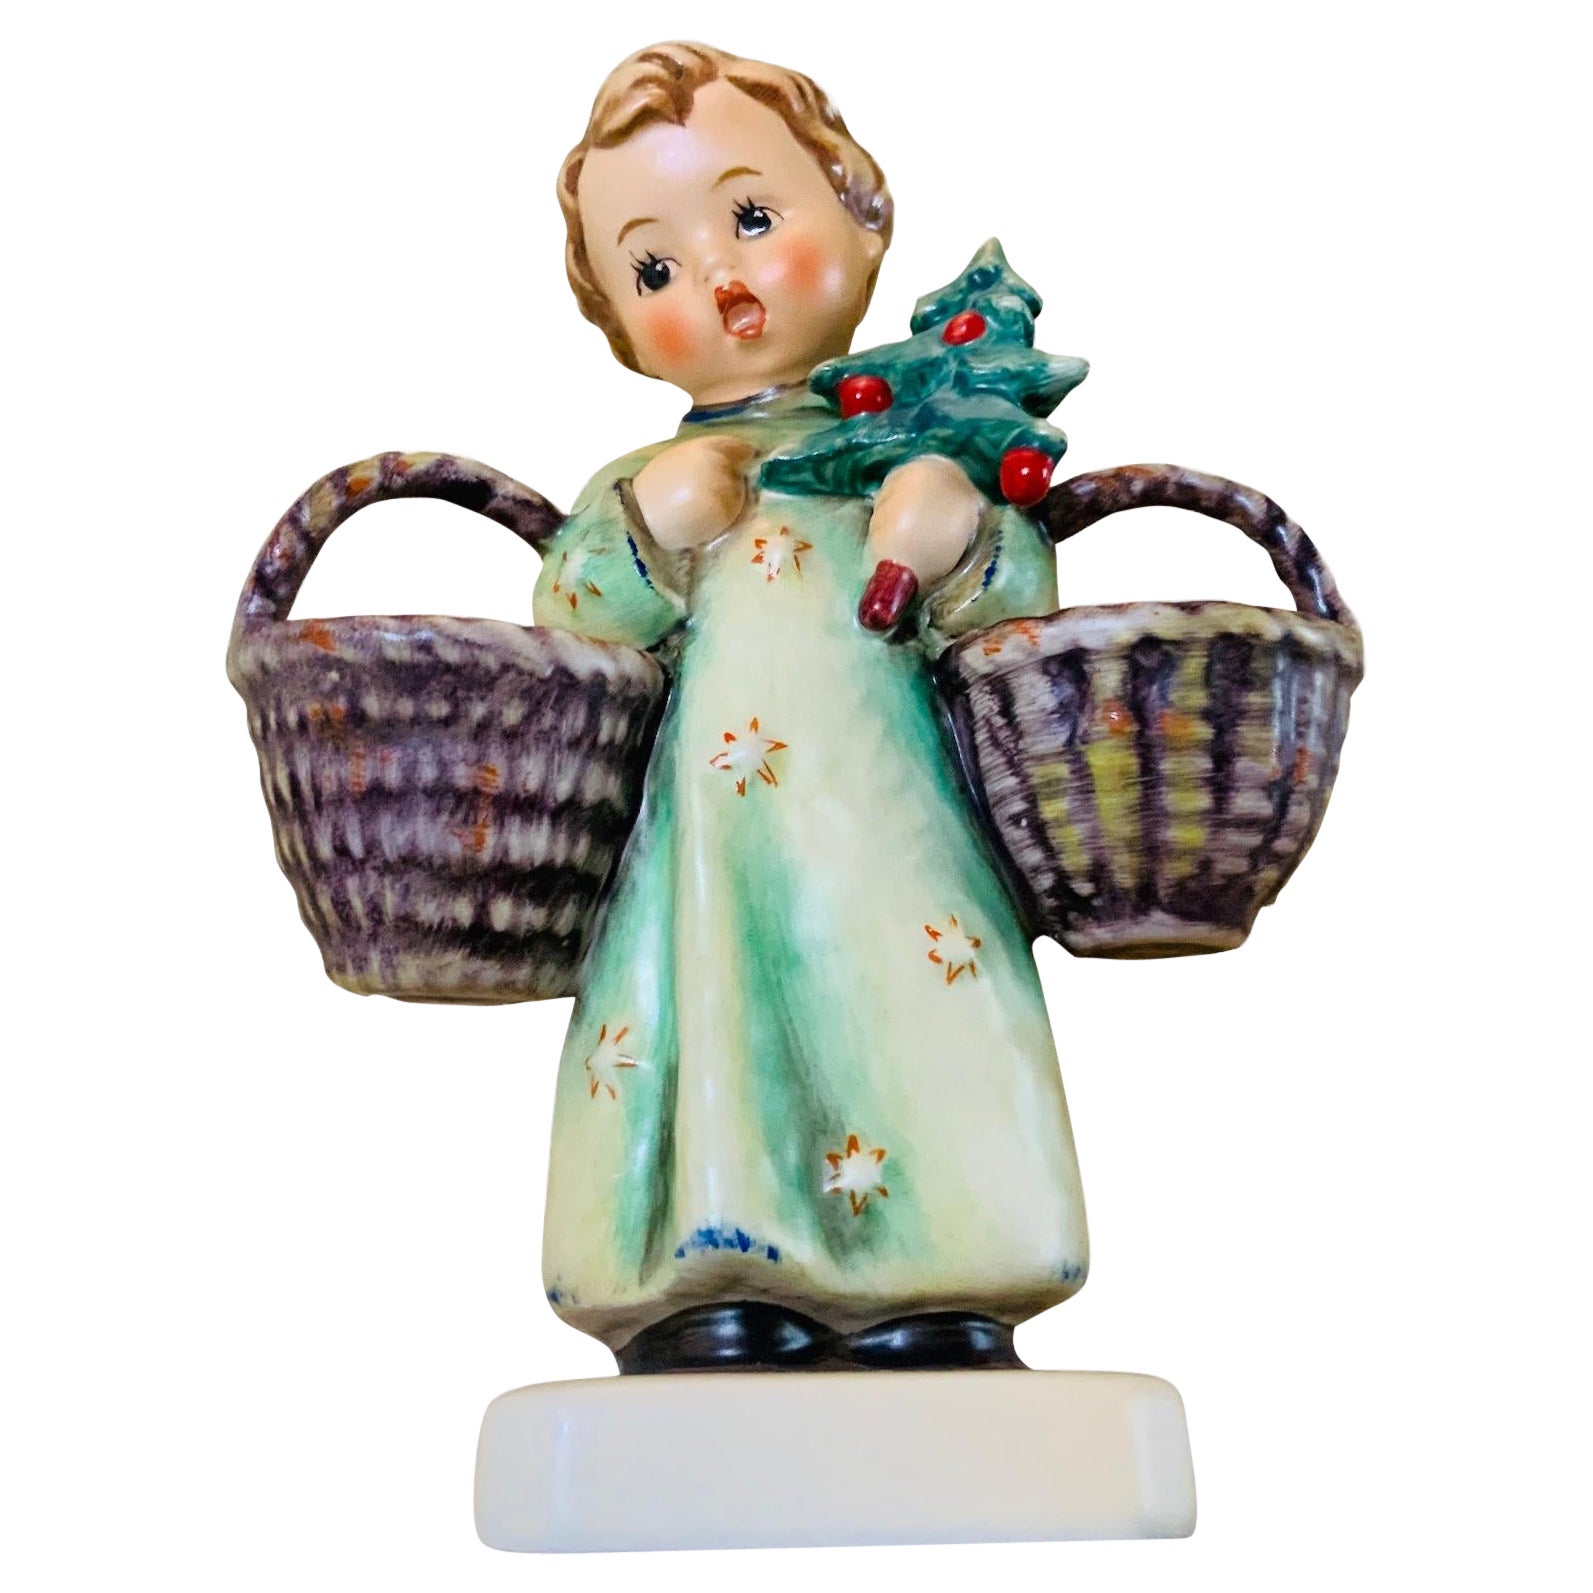 Goebel Company Hummel Porcelain Figurine “Christmas Angel”